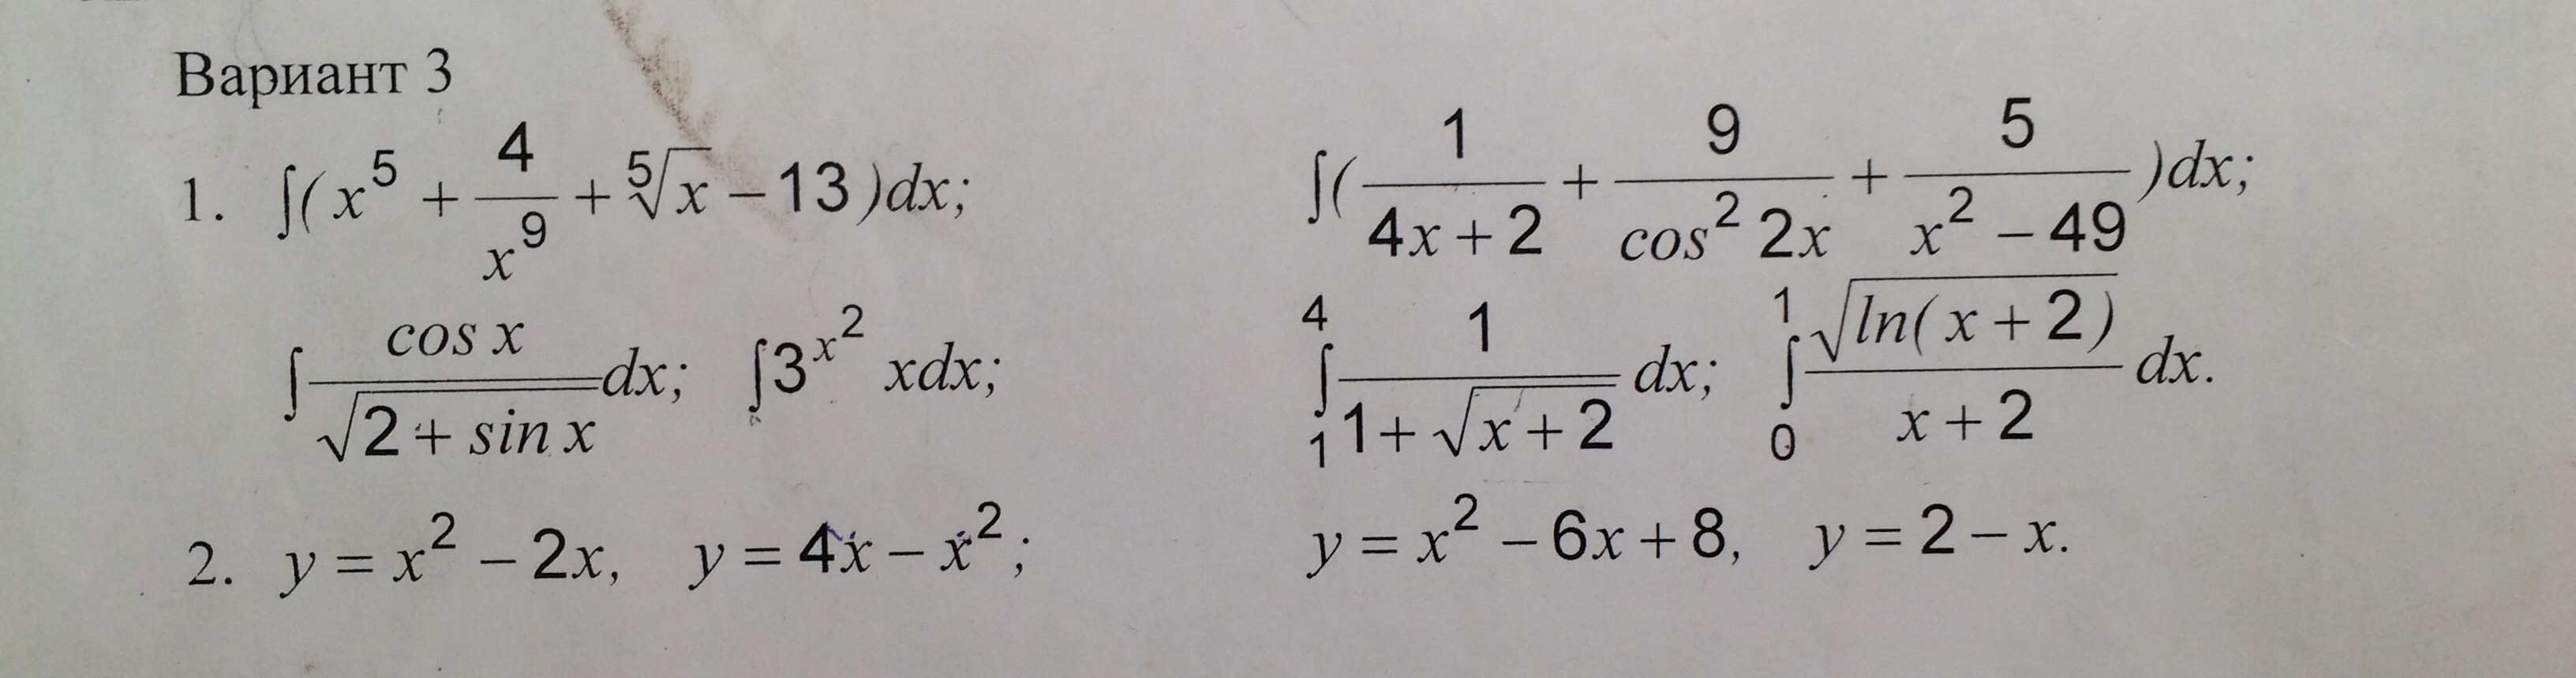 Вариант 58715384 математика решу. 13е145 математика решение. Решать математику ×+650-750=150.